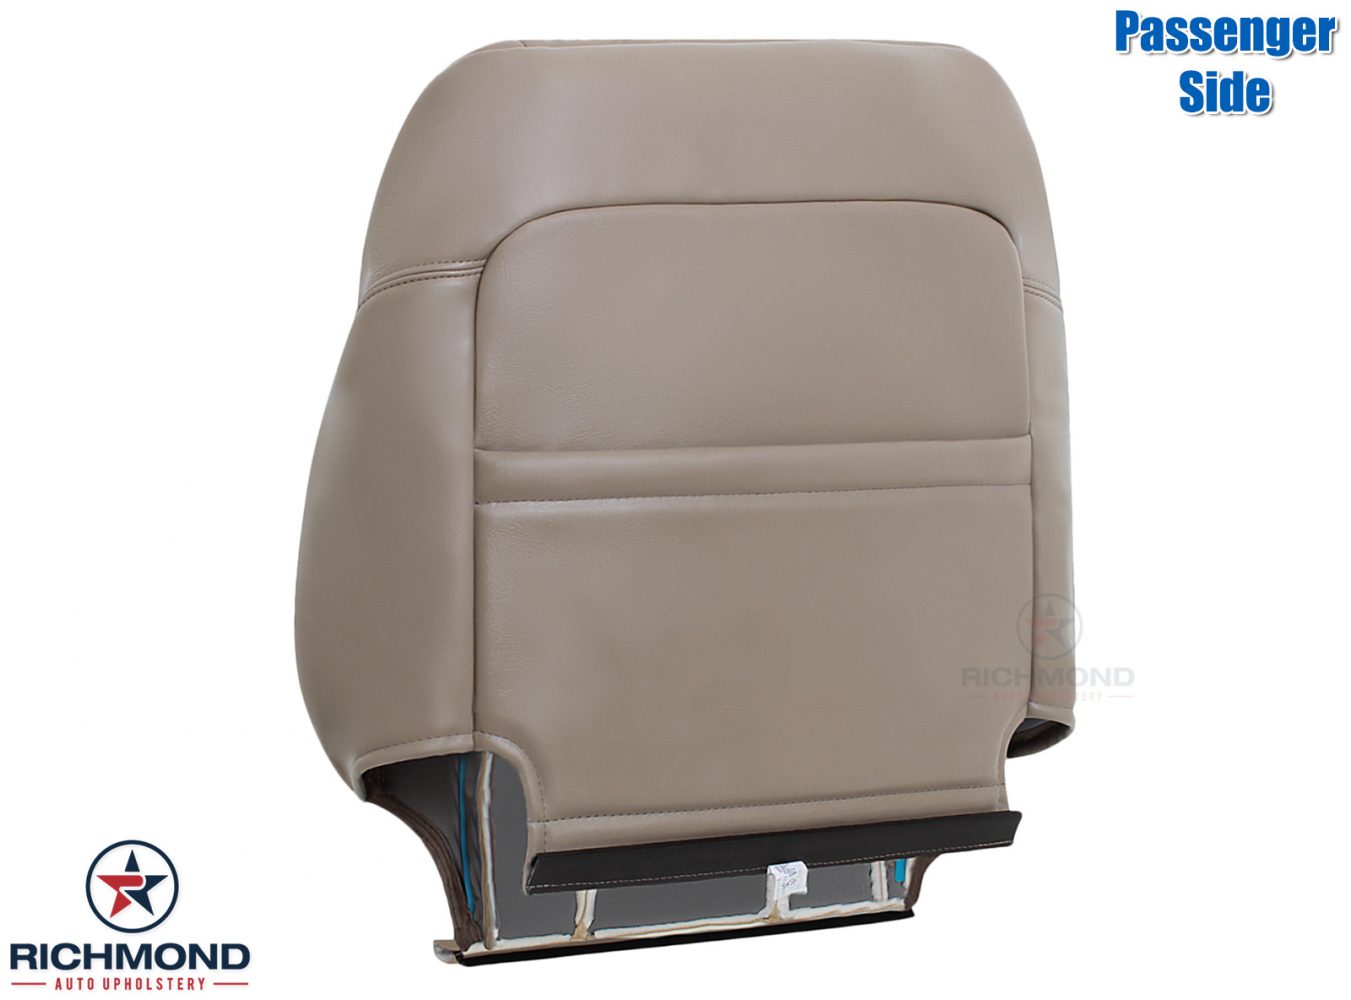 Driver & Passenger Bottom Leather Seat Cover ShadeTan Fits 2002 Toyota 4Runner